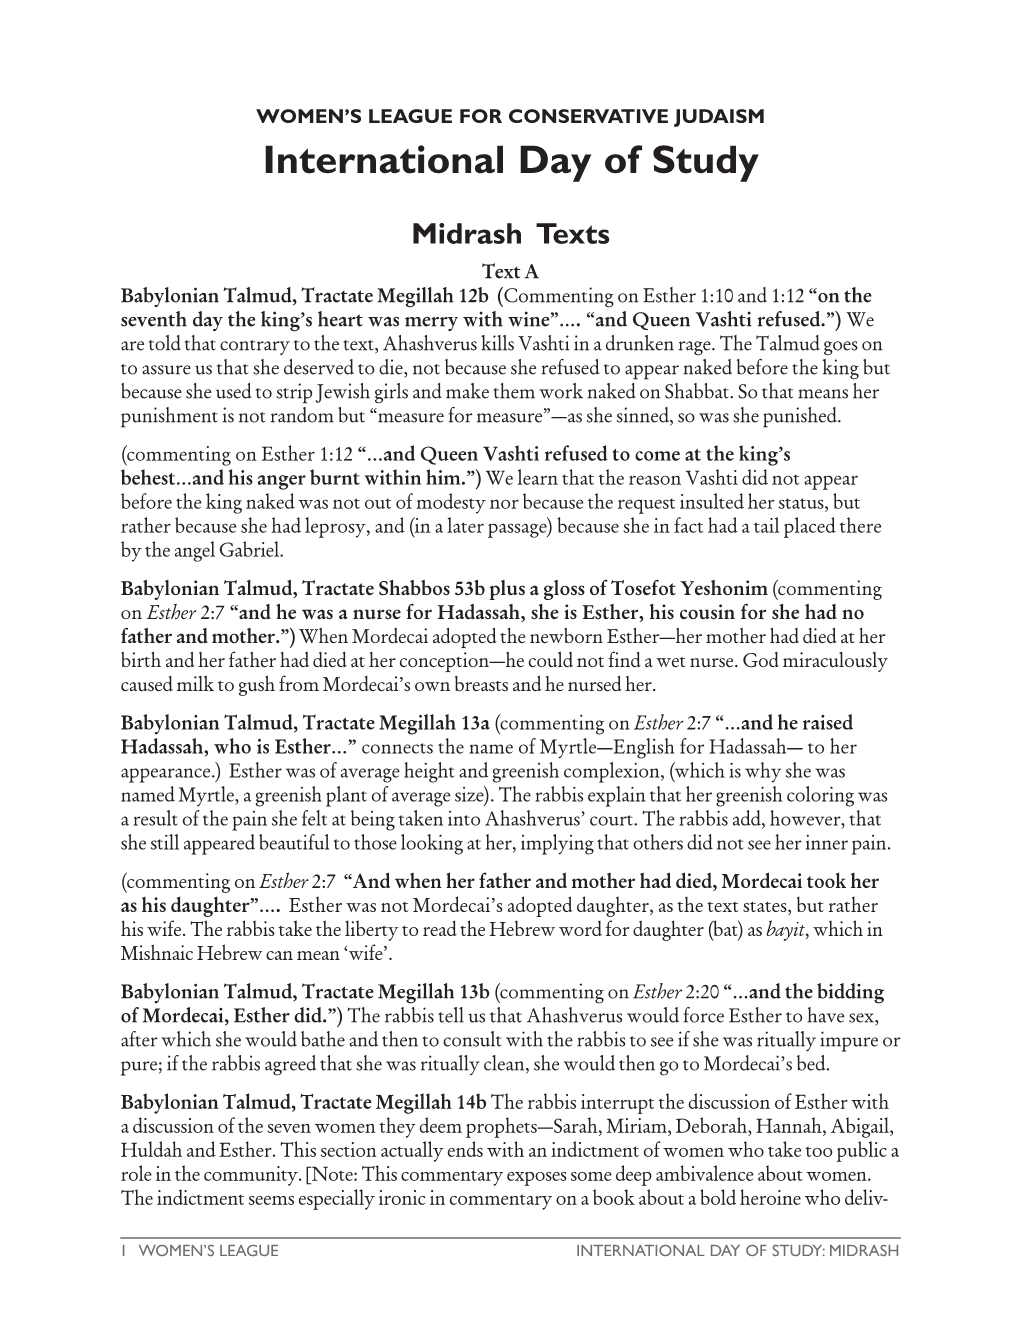 International Day of Study